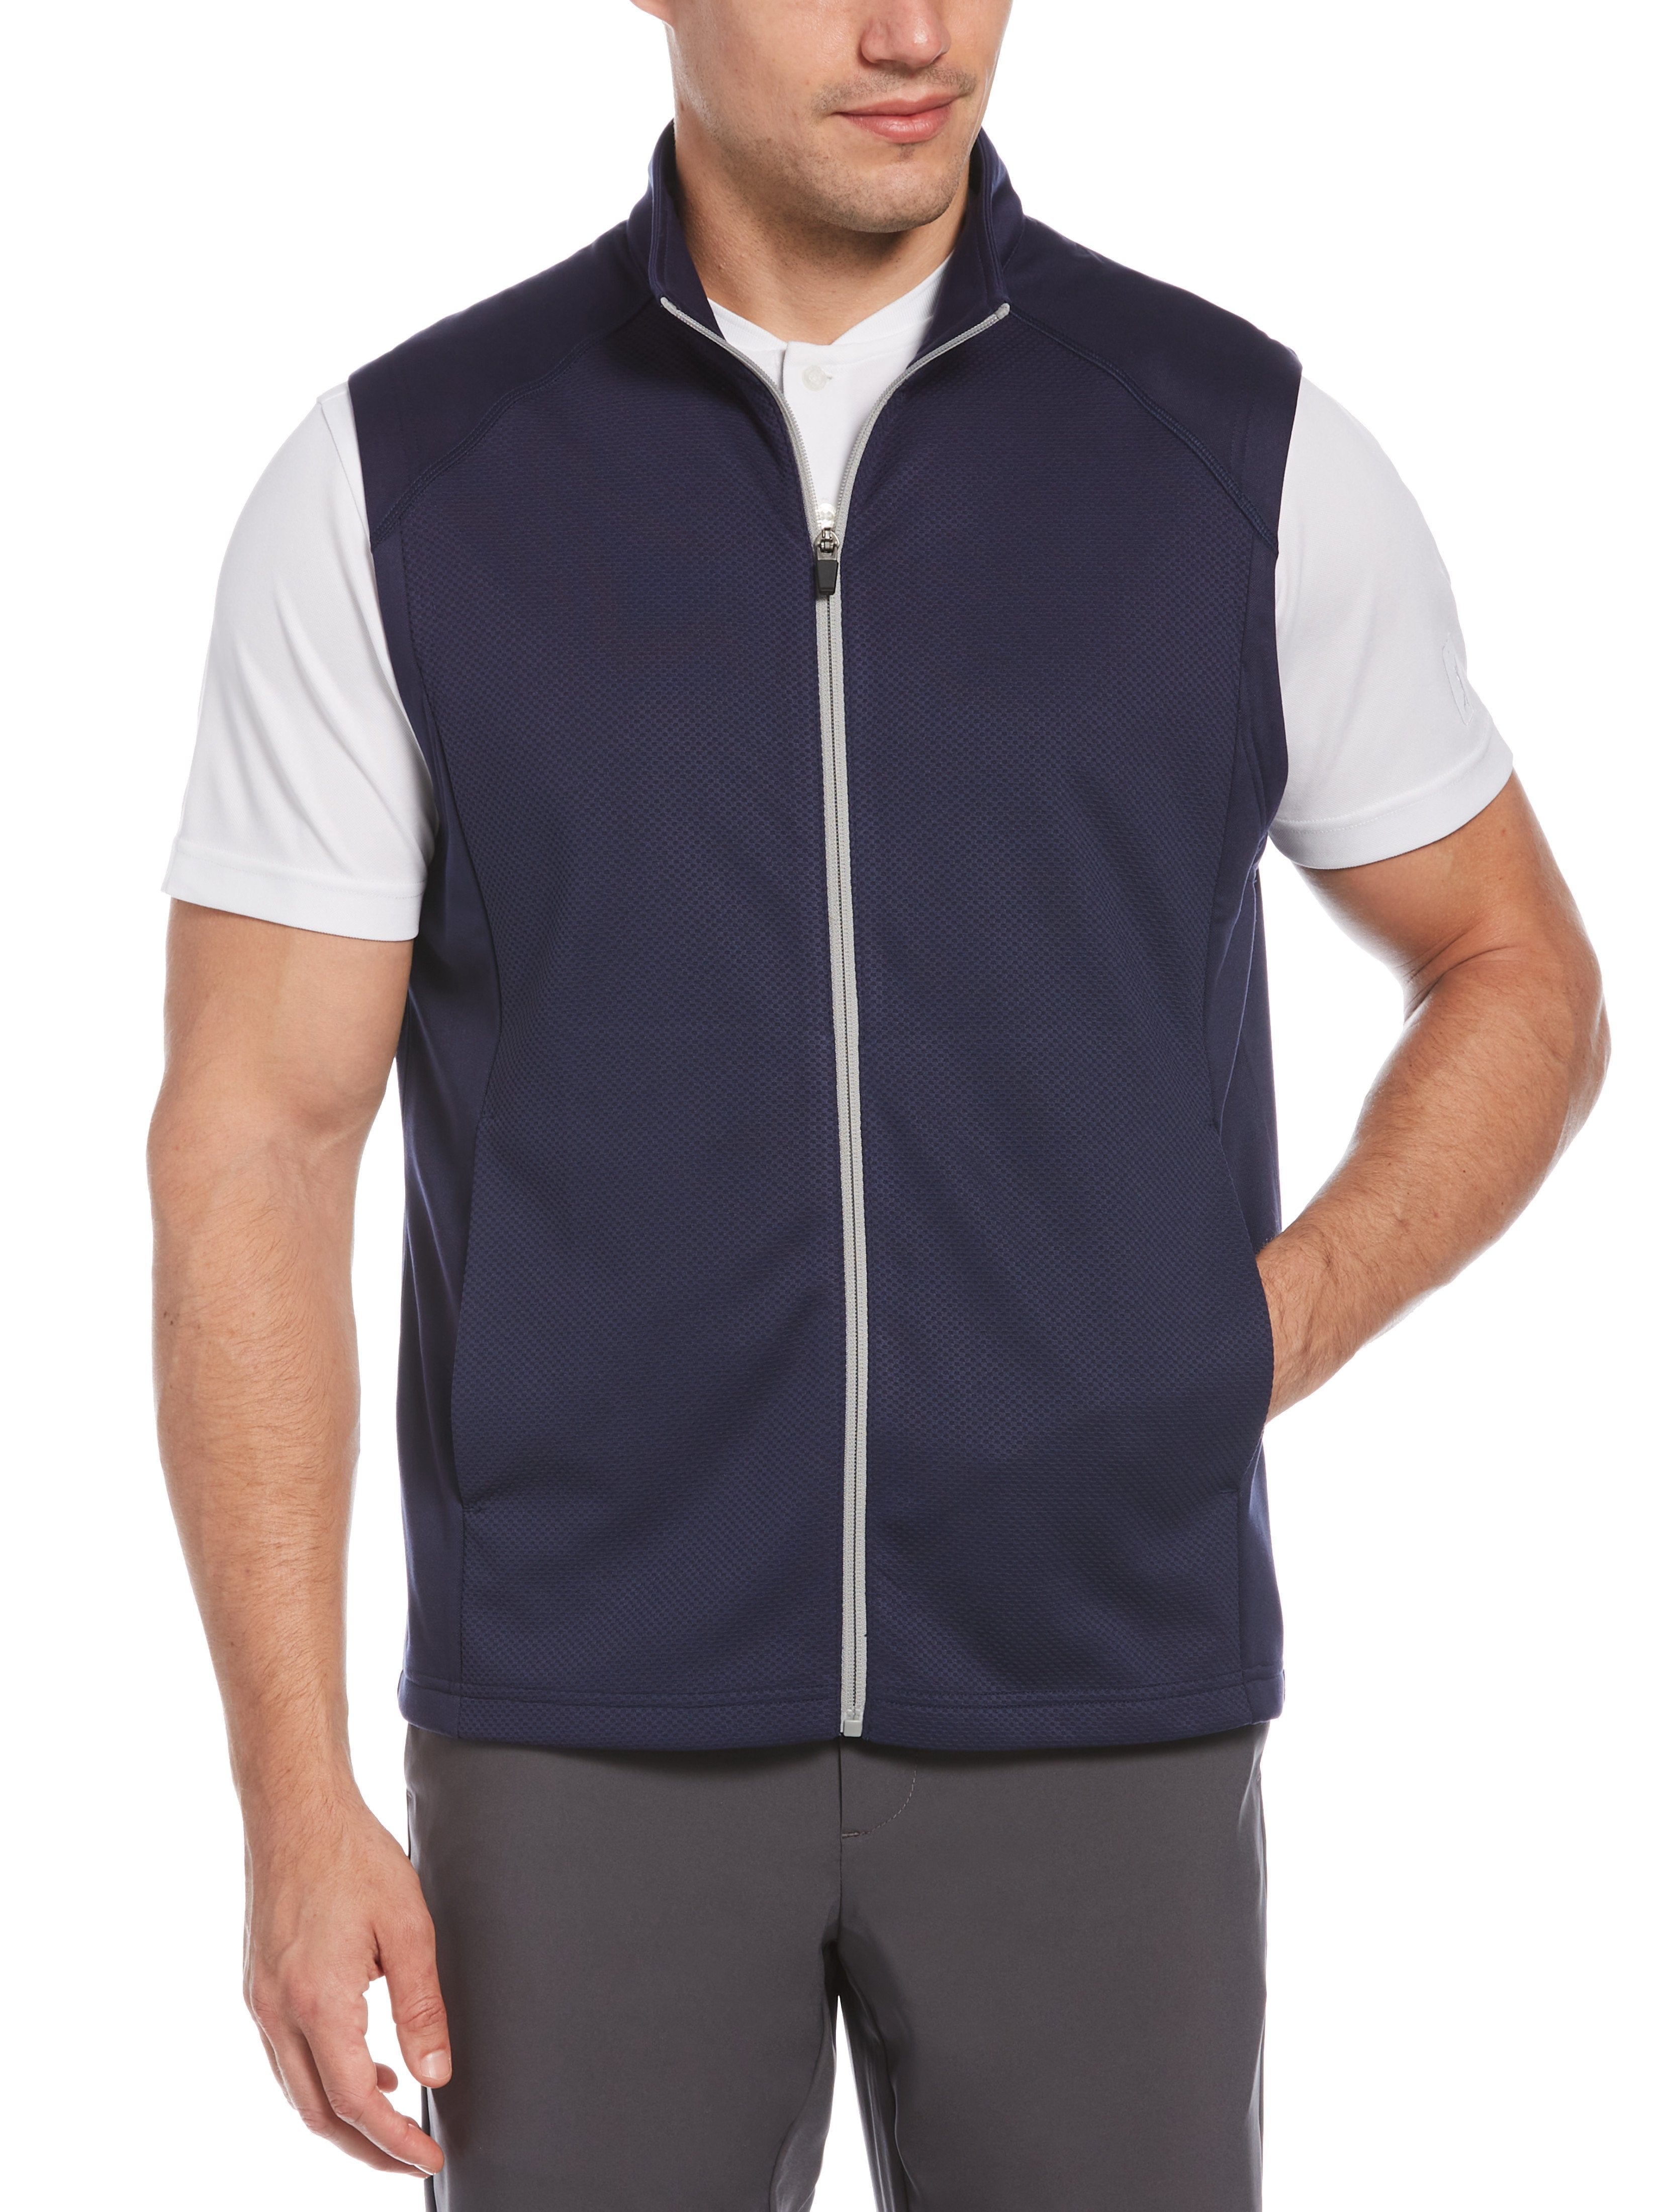 PGA TOUR Apparel Mens Mixed Texture Fleece Golf Vest Top, Size XL, Navy Blue, 100% Polyester | Golf Apparel Shop